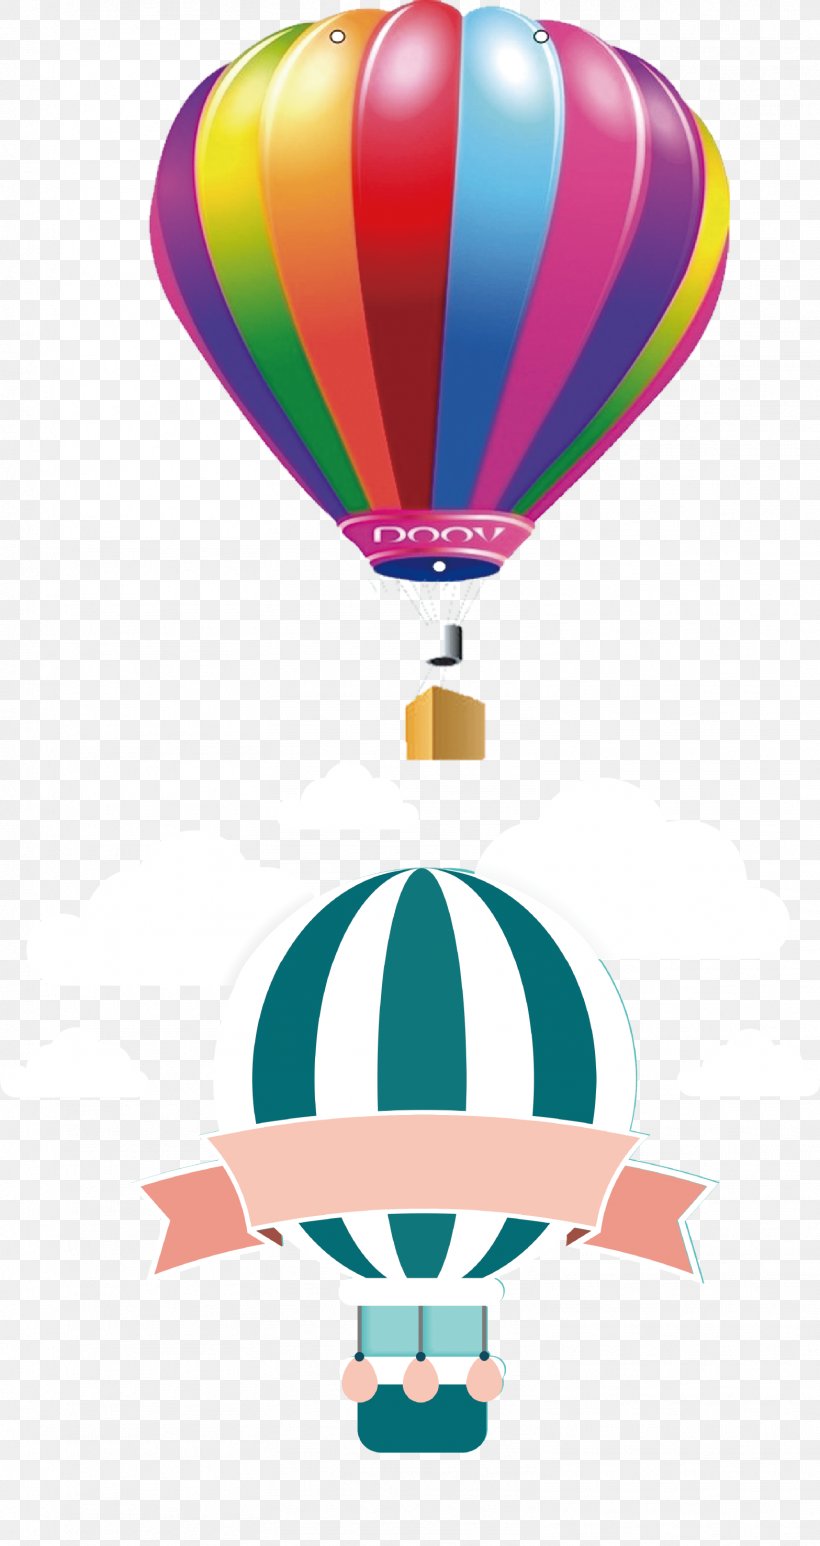 Balloon Basket Illustration, PNG, 1567x2956px, Balloon, Basket, Blue, Drawing, Hot Air Balloon Download Free